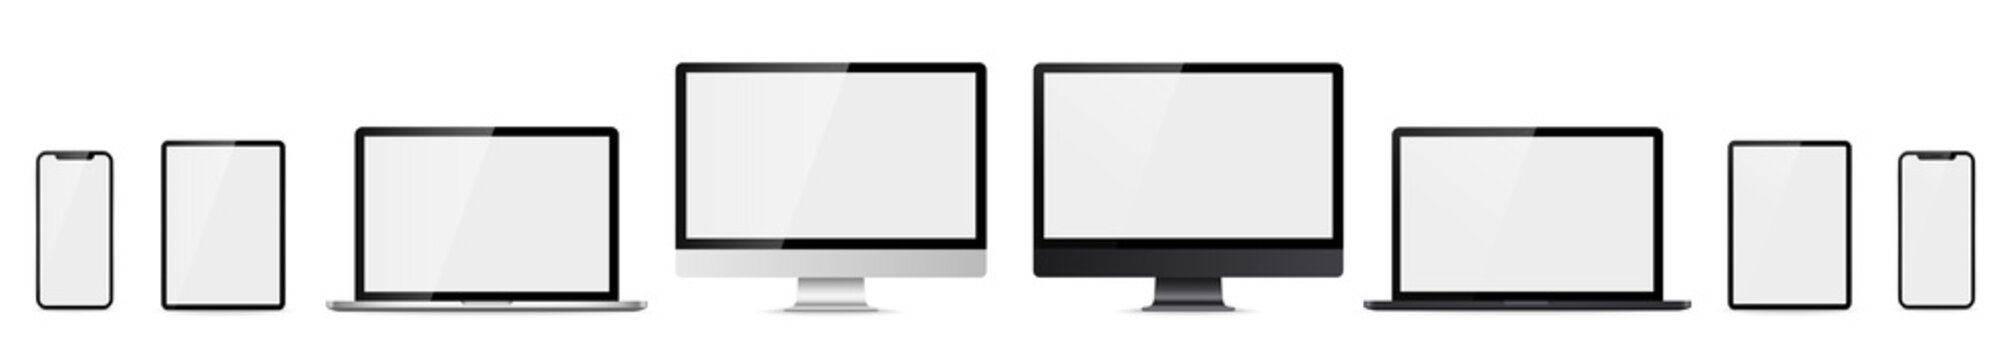 Computer, laptop, tablet, phone, smartphone set . Vector illustration